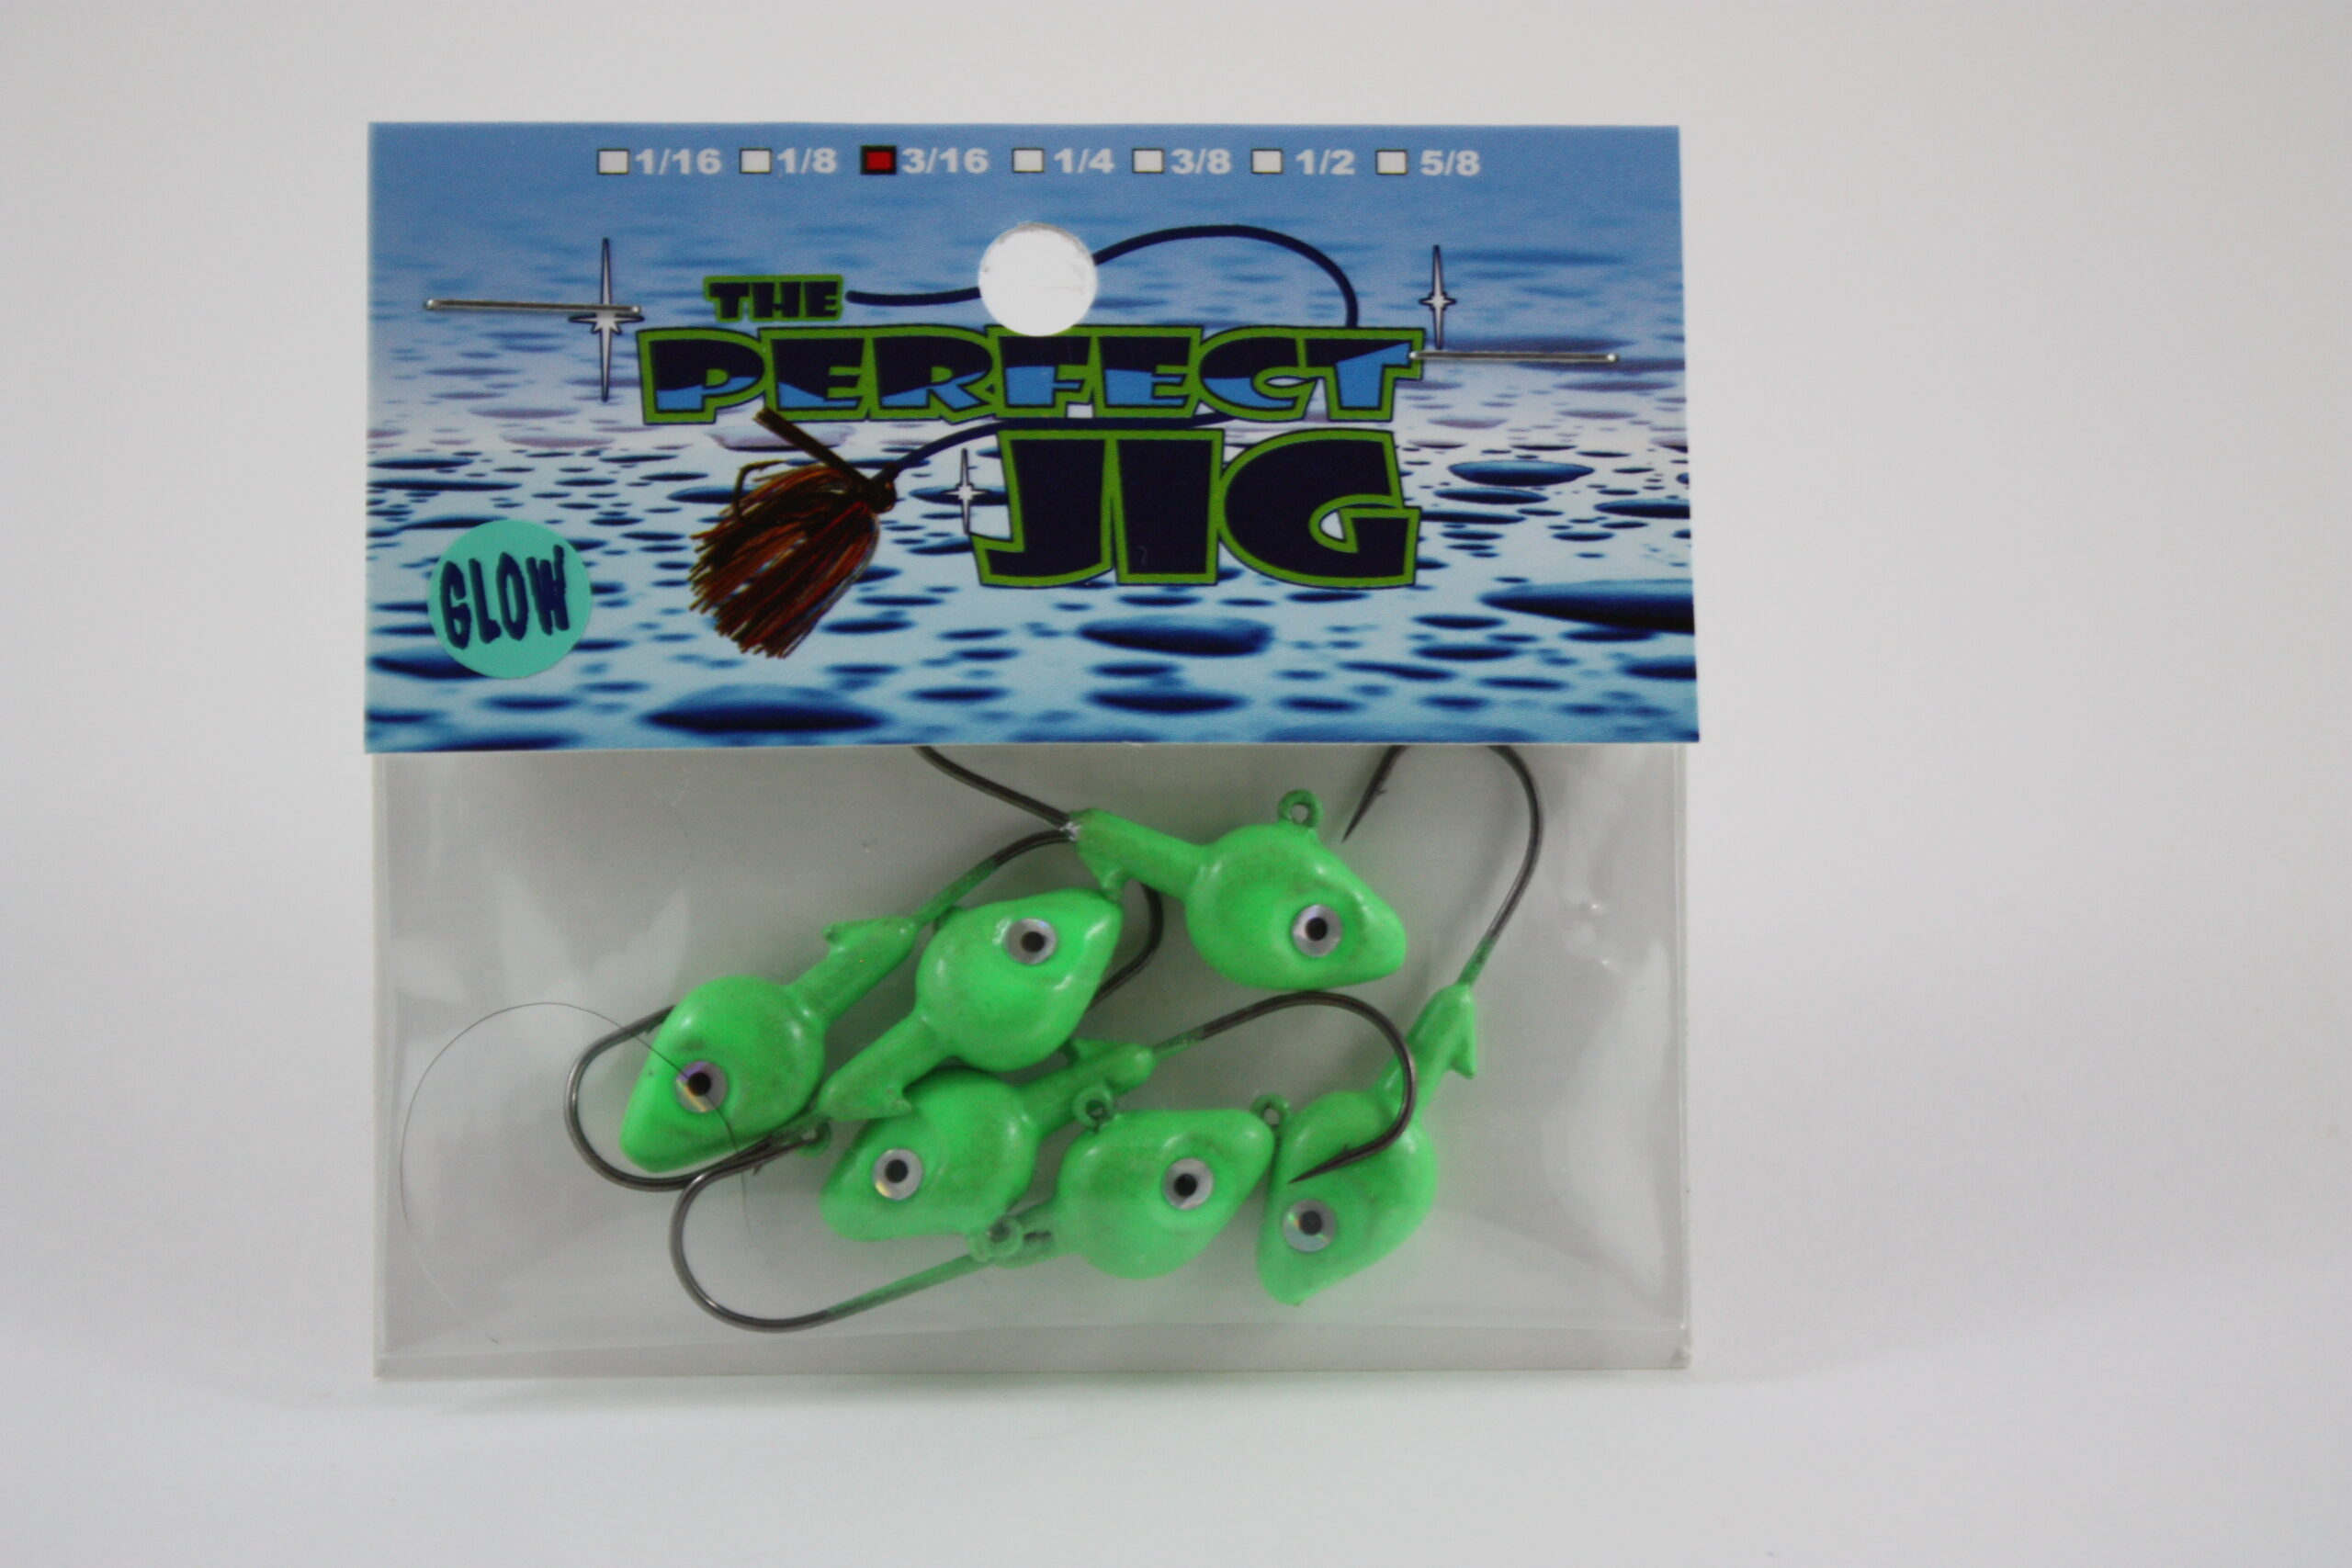 Super Glow green Minnow jig heads - The Perfect Jig